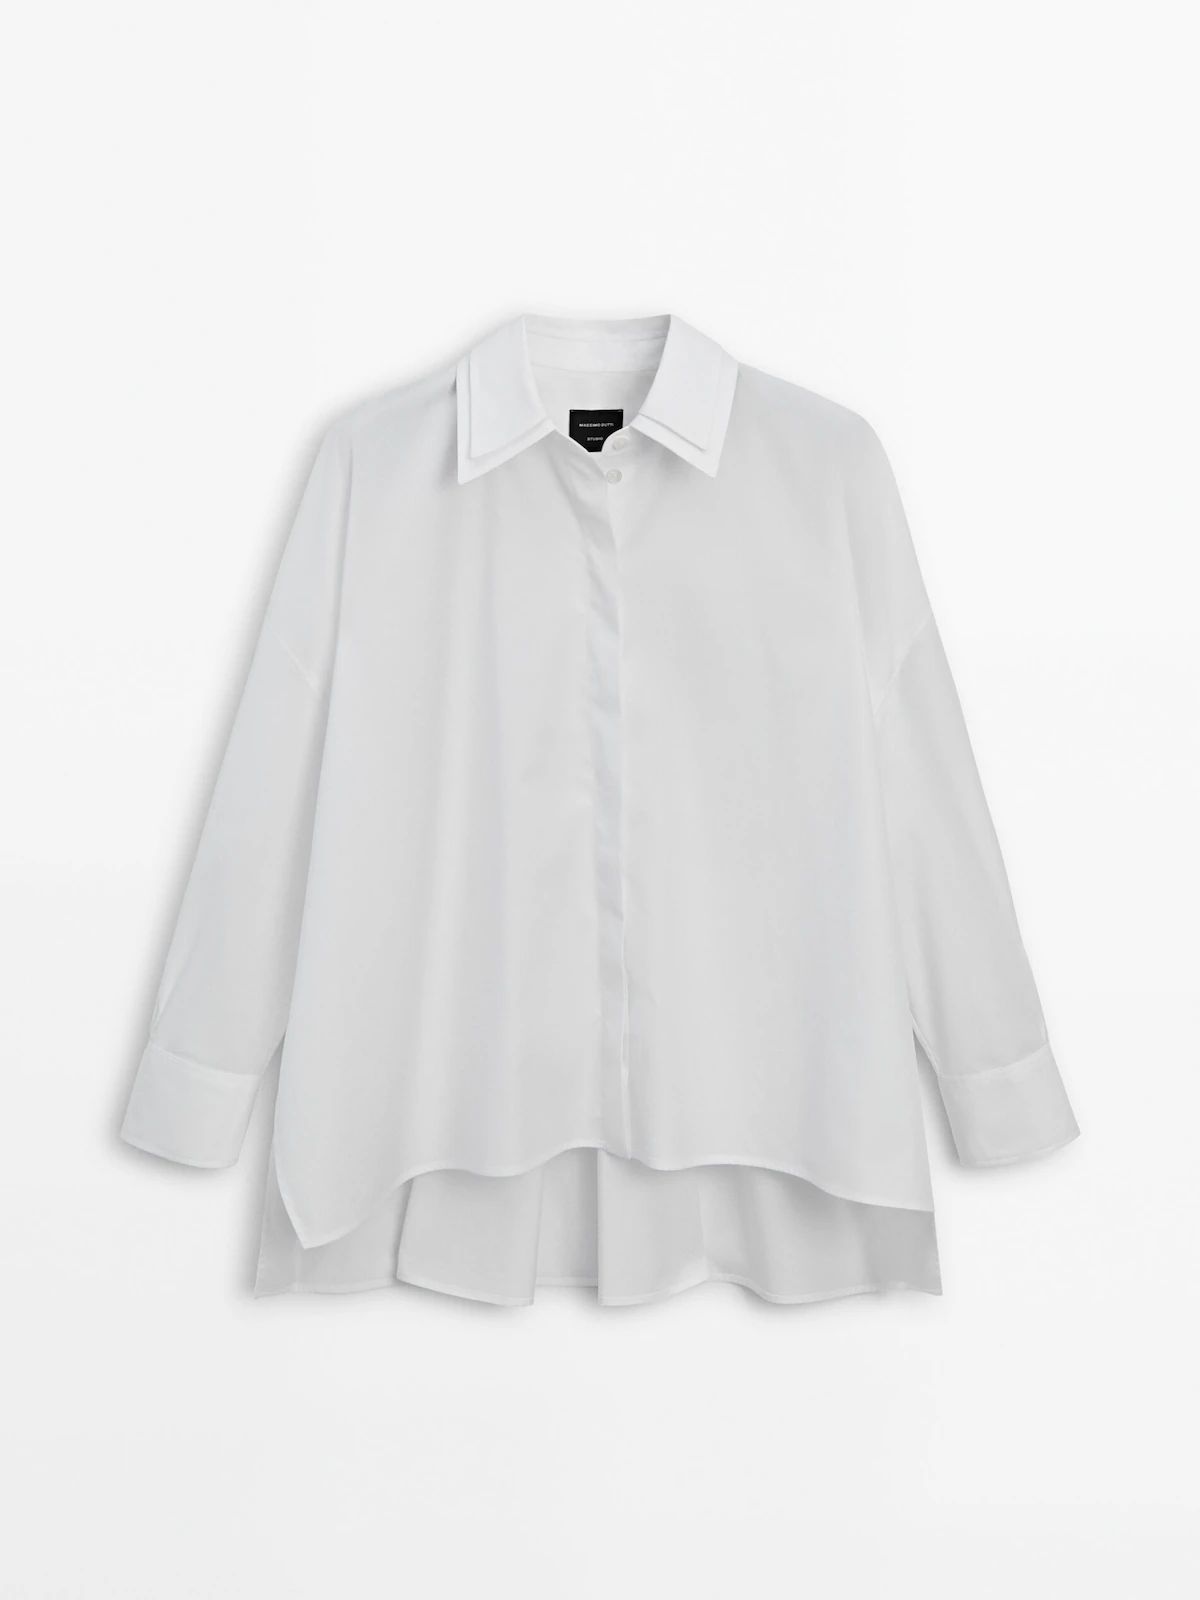 Poplin shirt with layered collar detail - Studio | Massimo Dutti (US)